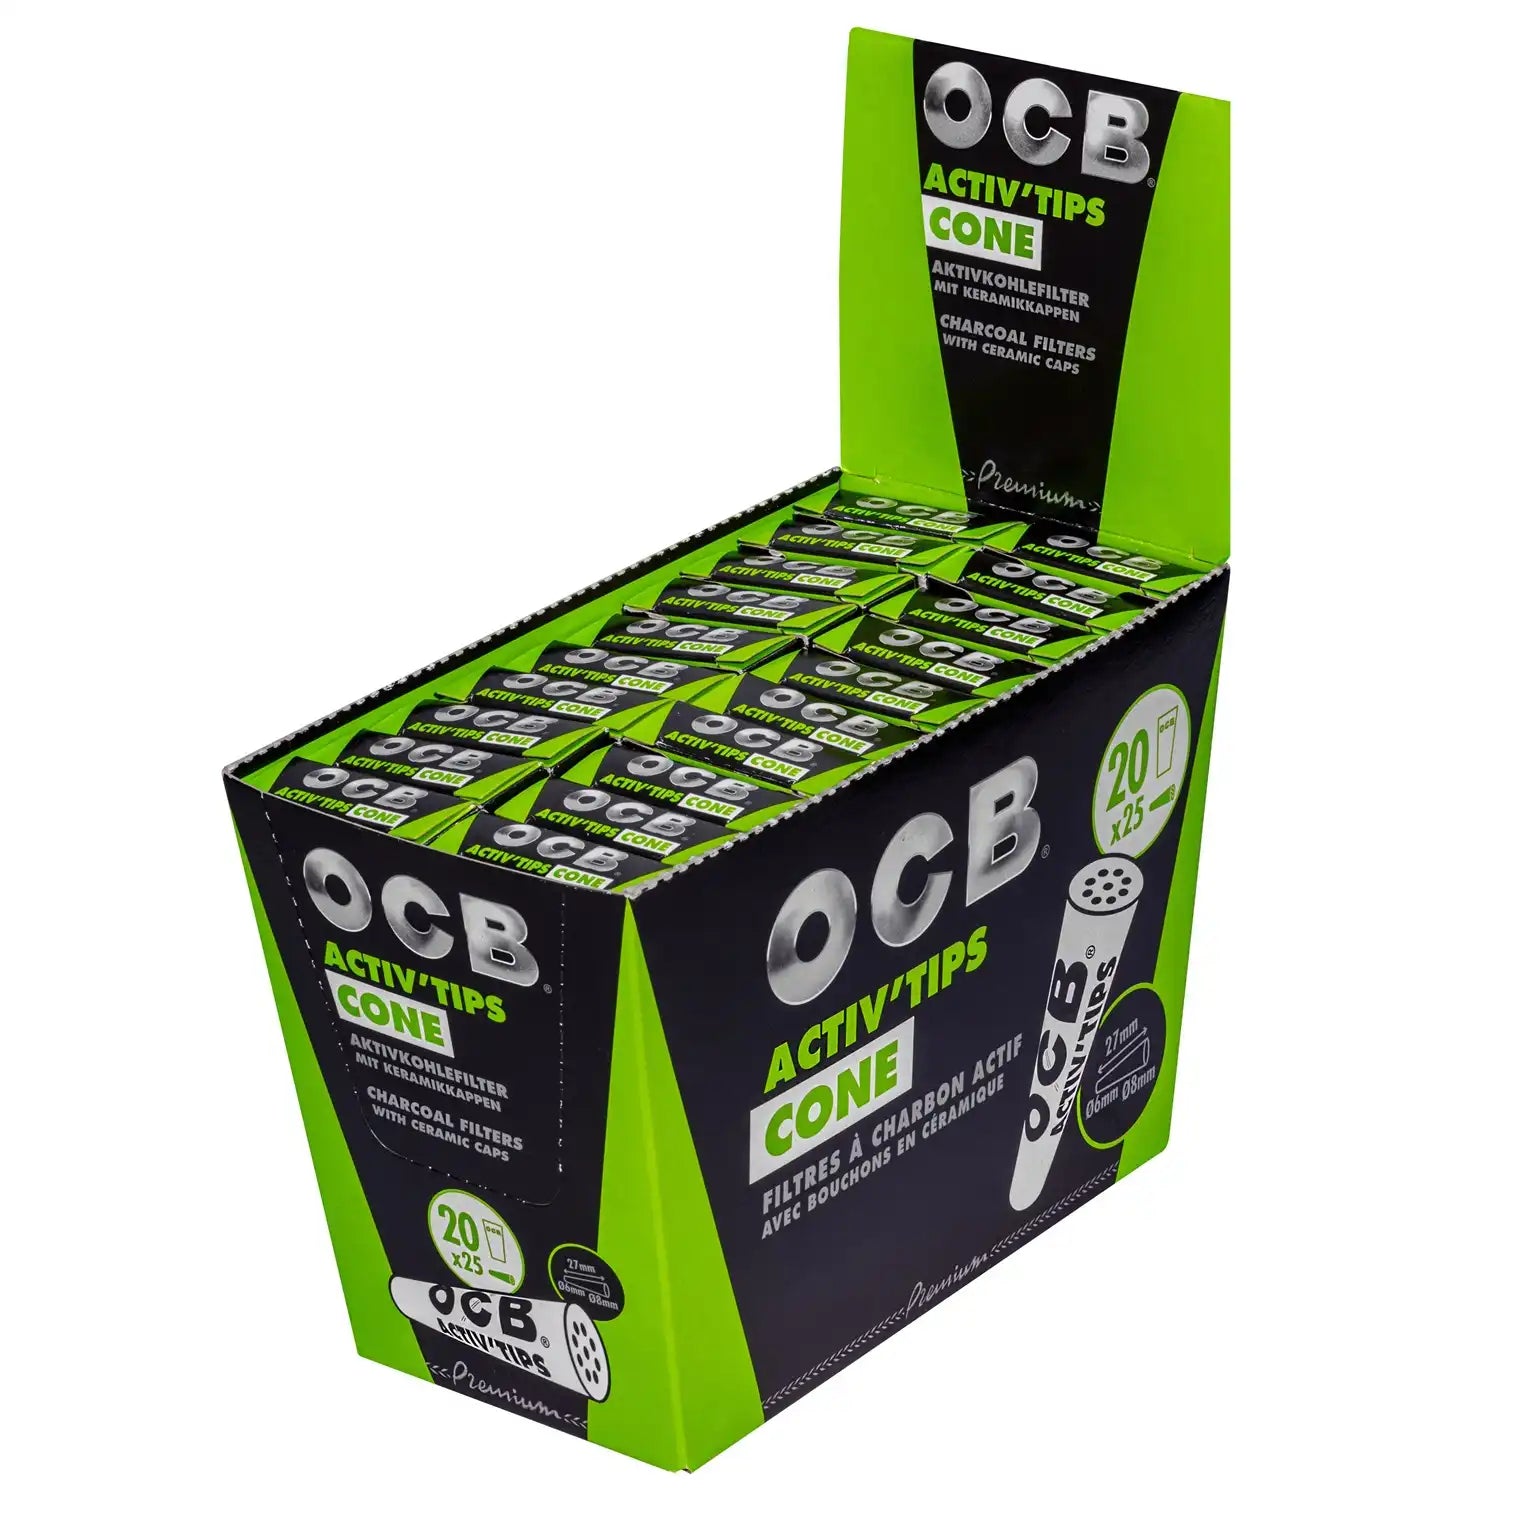 OCB Active Tips Cone 25 Stueck Verpackungseinheit